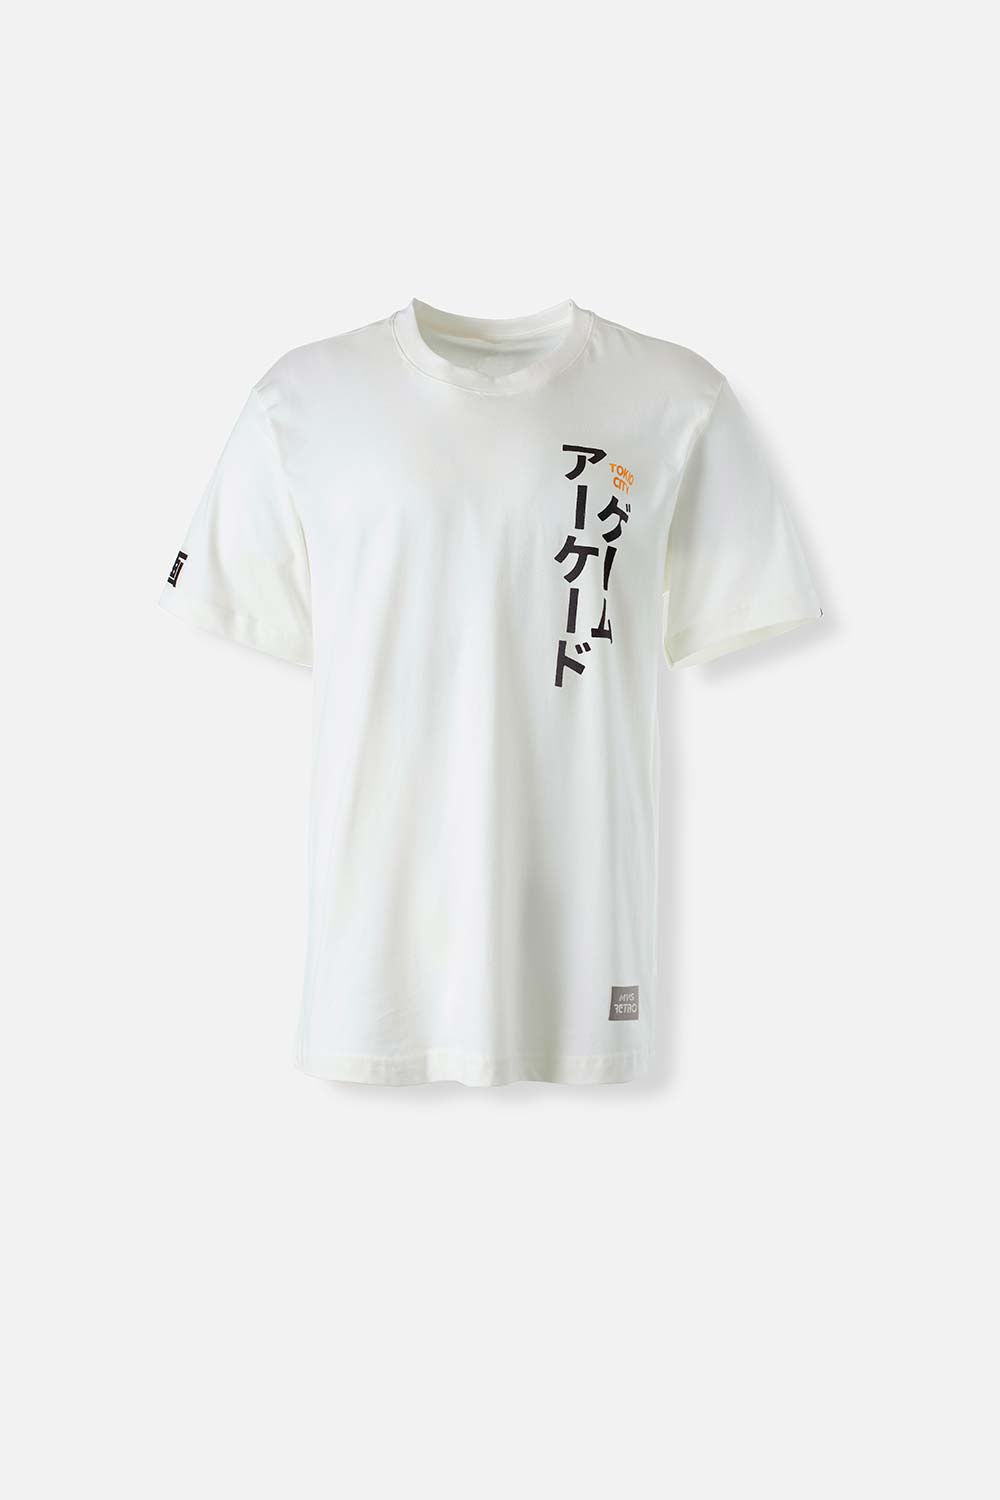 Camiseta Movies marfil manga corta género neutro XS-0